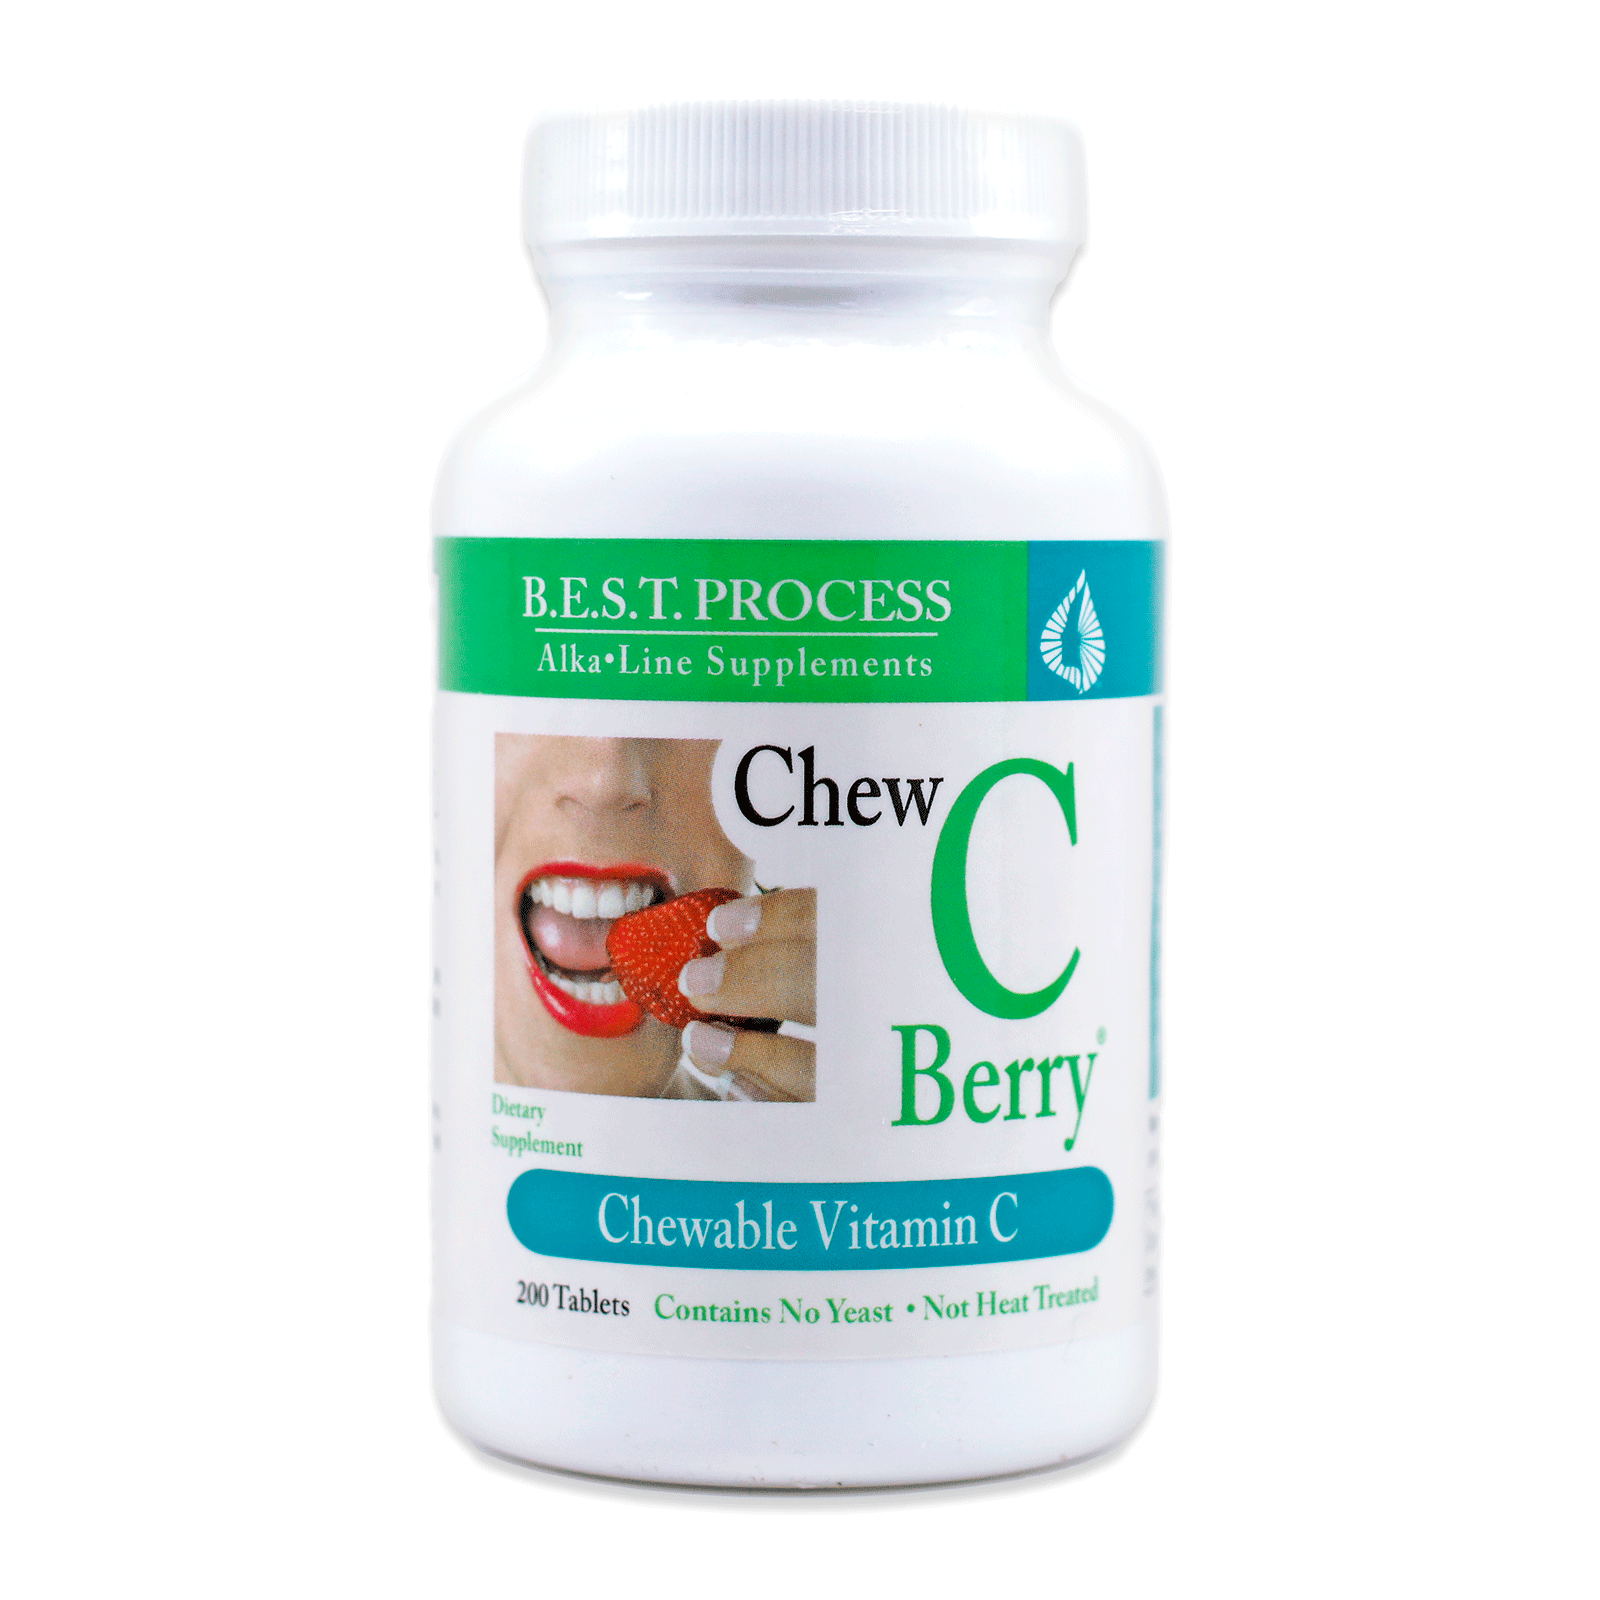 Chew C Berry™ bottle front label